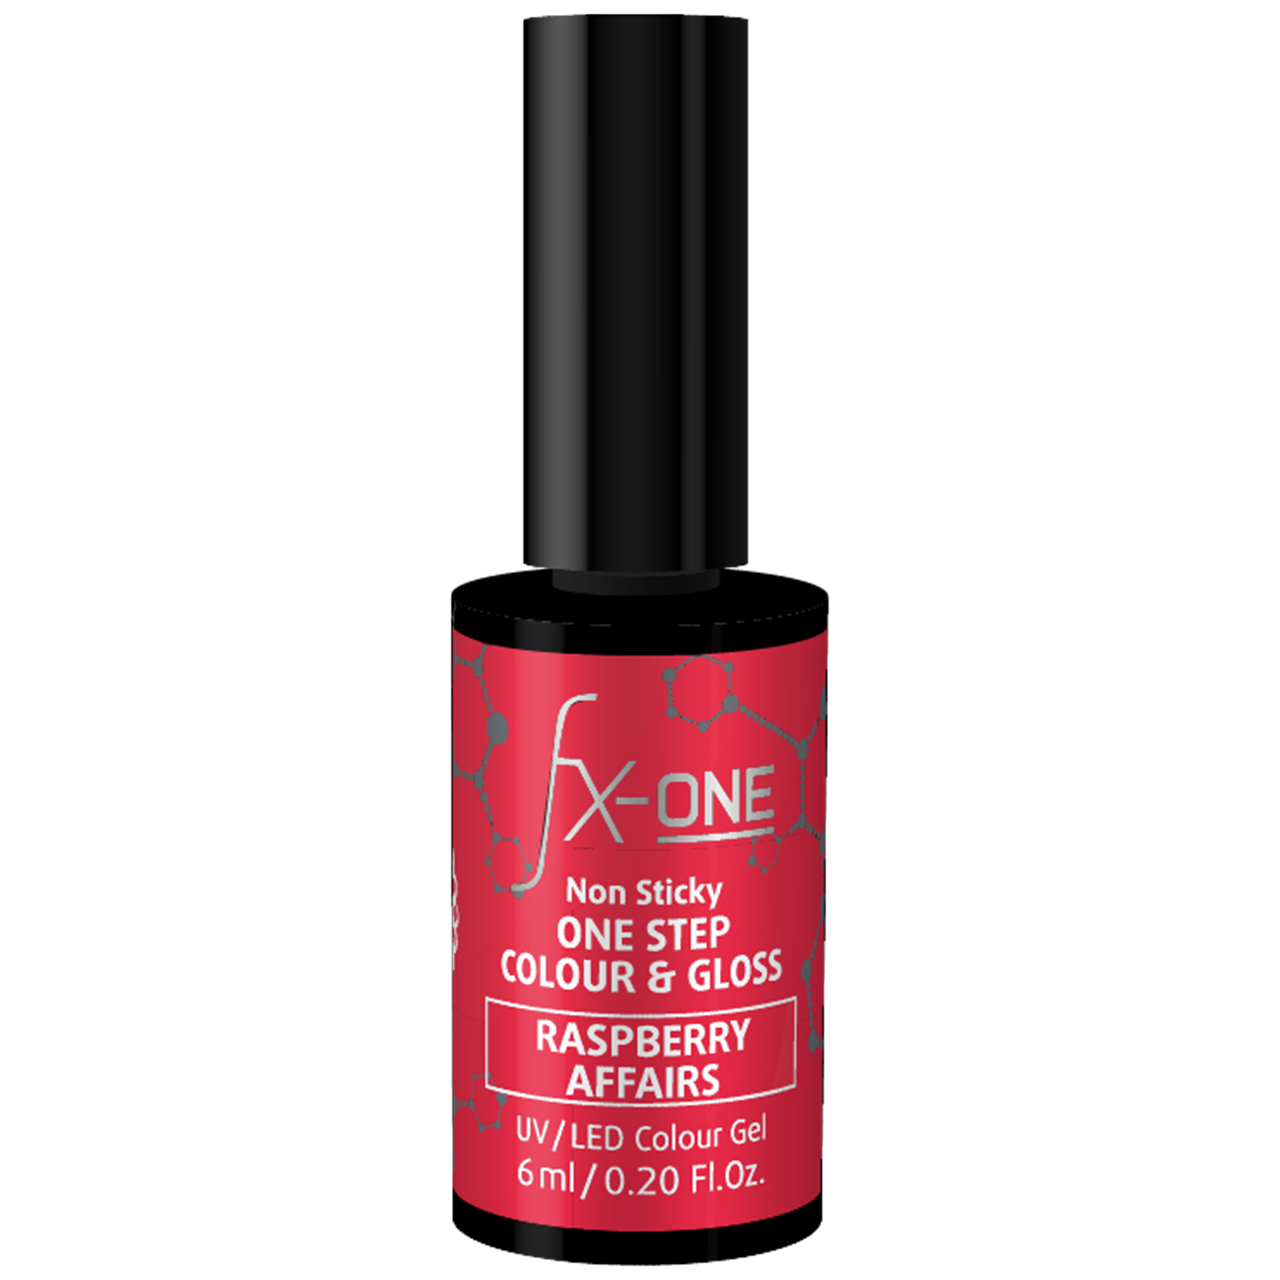 FX-One Colour & Gloss Raspberry Affairs